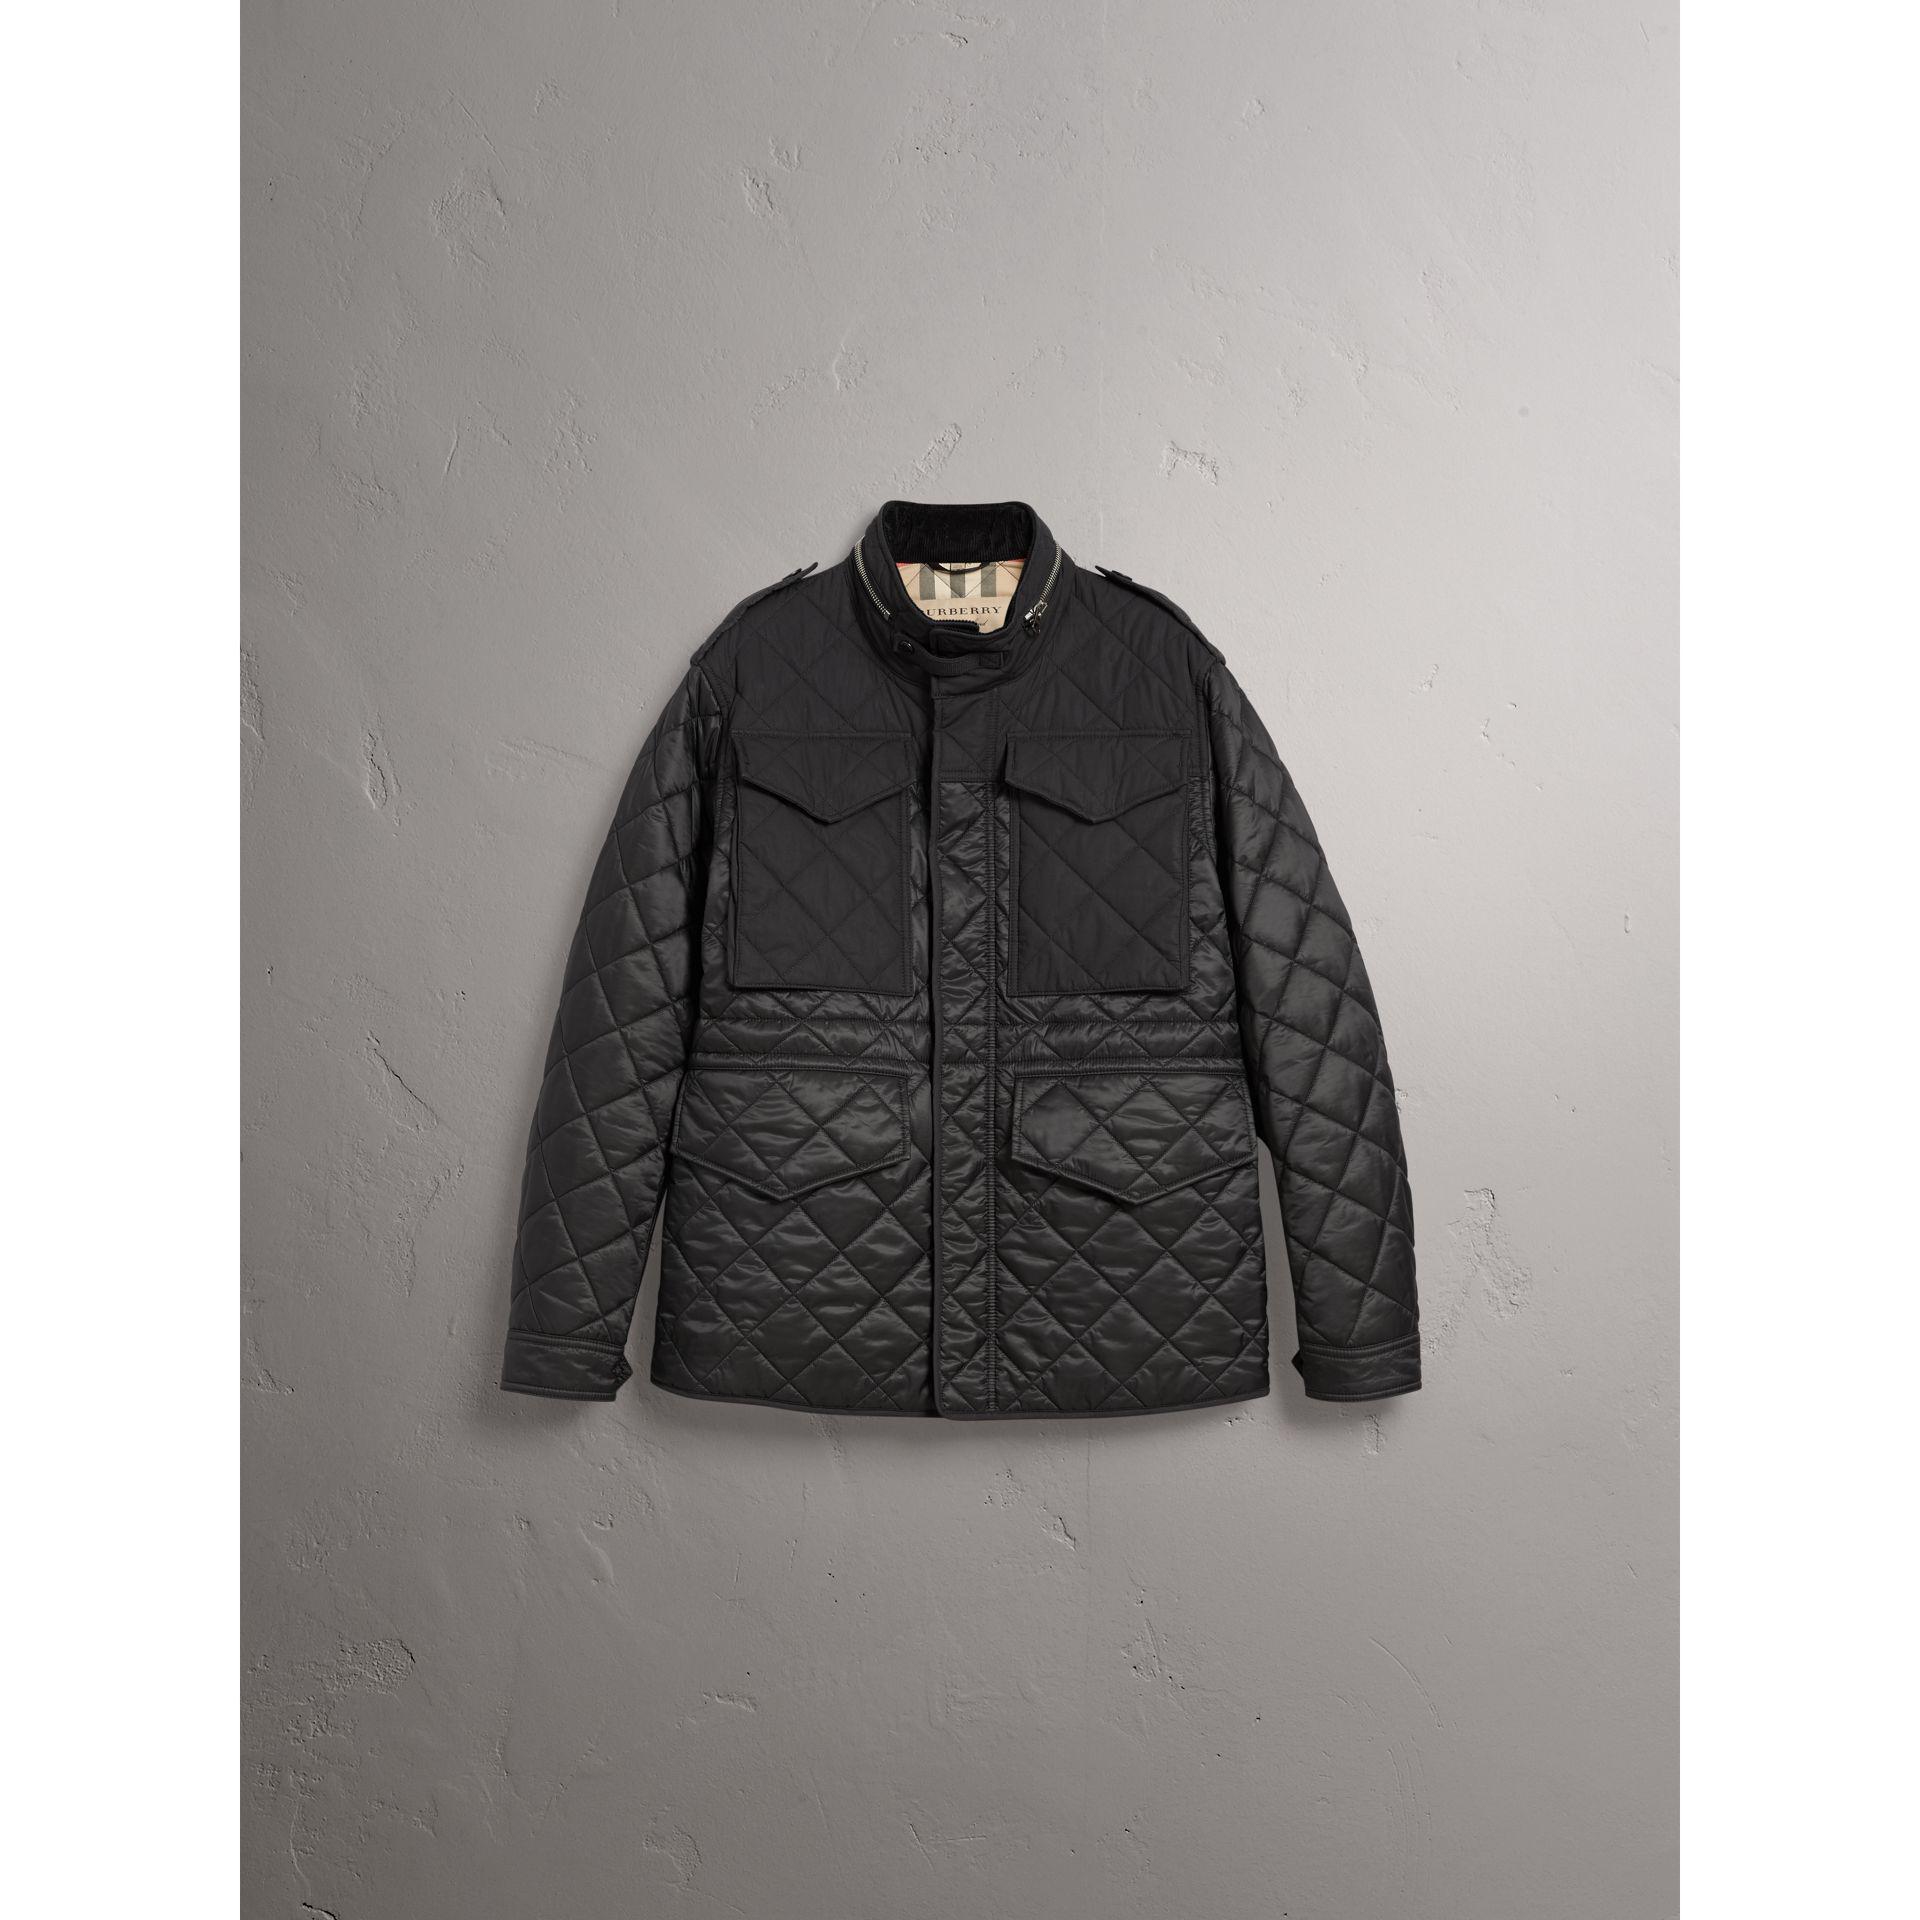 Burberry Corduroy Packaway Hood Diamond Quilted Field Jacket in Black for  Men - Lyst